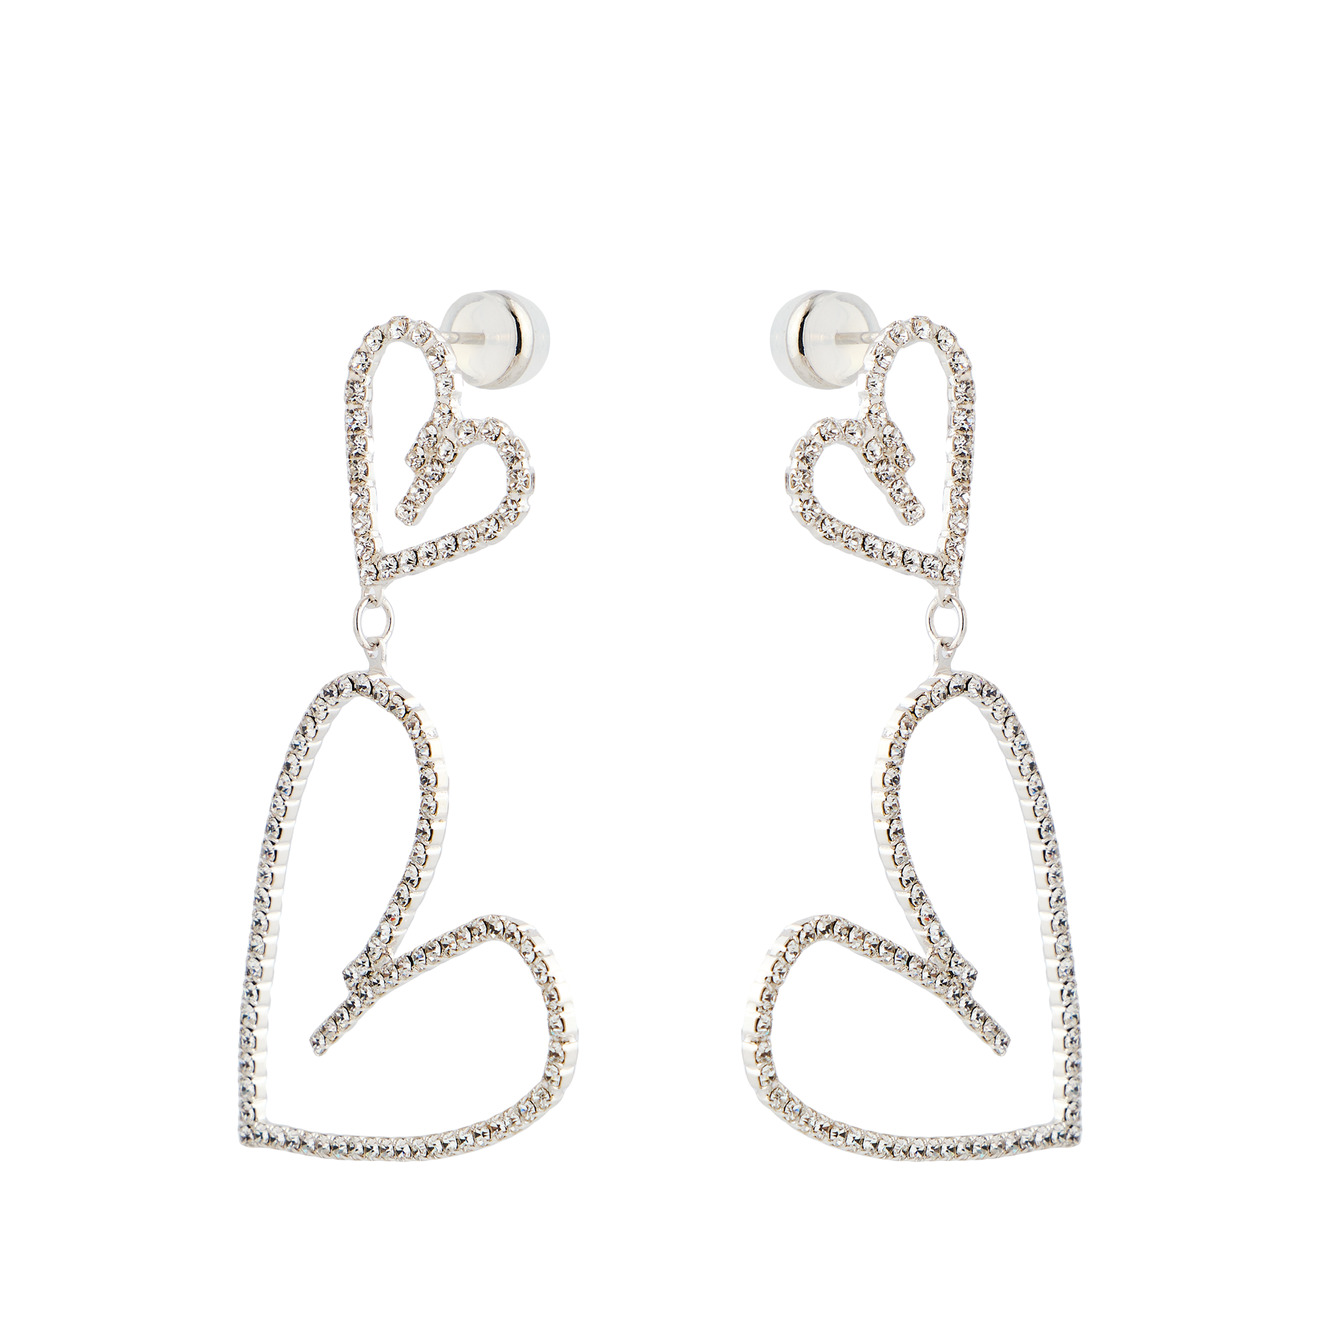 lisa smith серебристые двойные серьги сердца Herald Percy Серебристые тонкие серьги-сердца с кристаллами